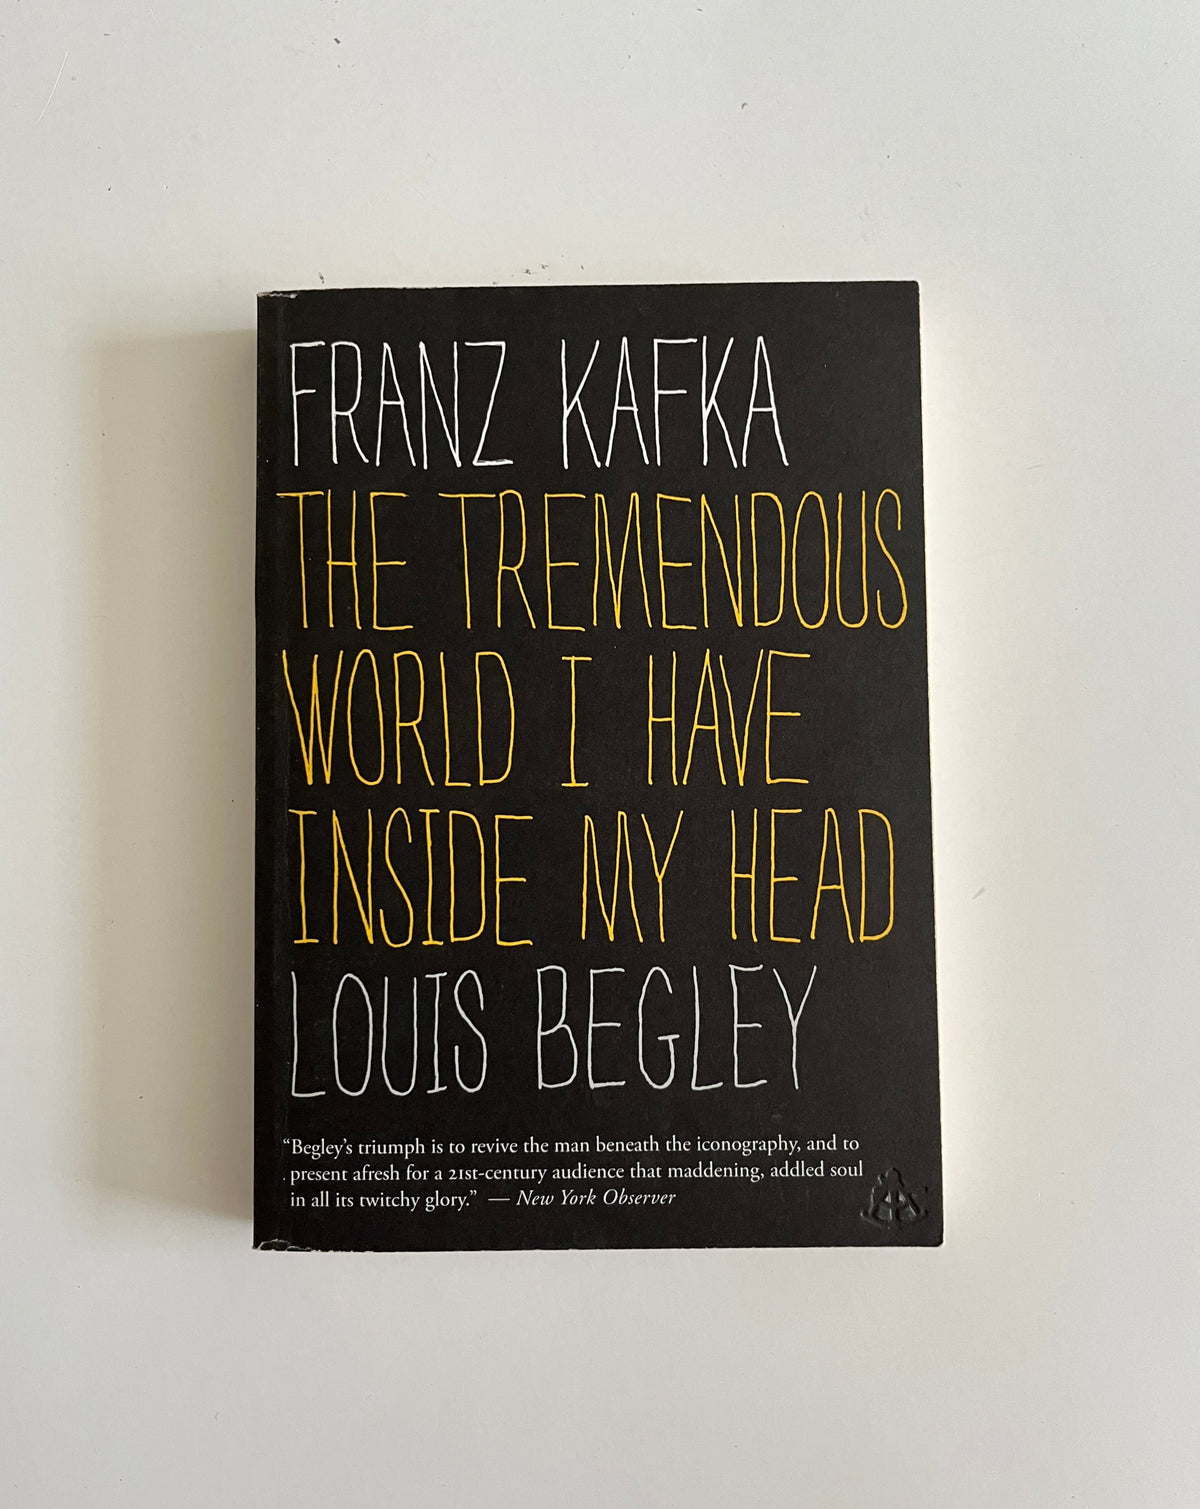 Franz Kafka: The Tremendous World I Have Inside My Head by Louis Begley